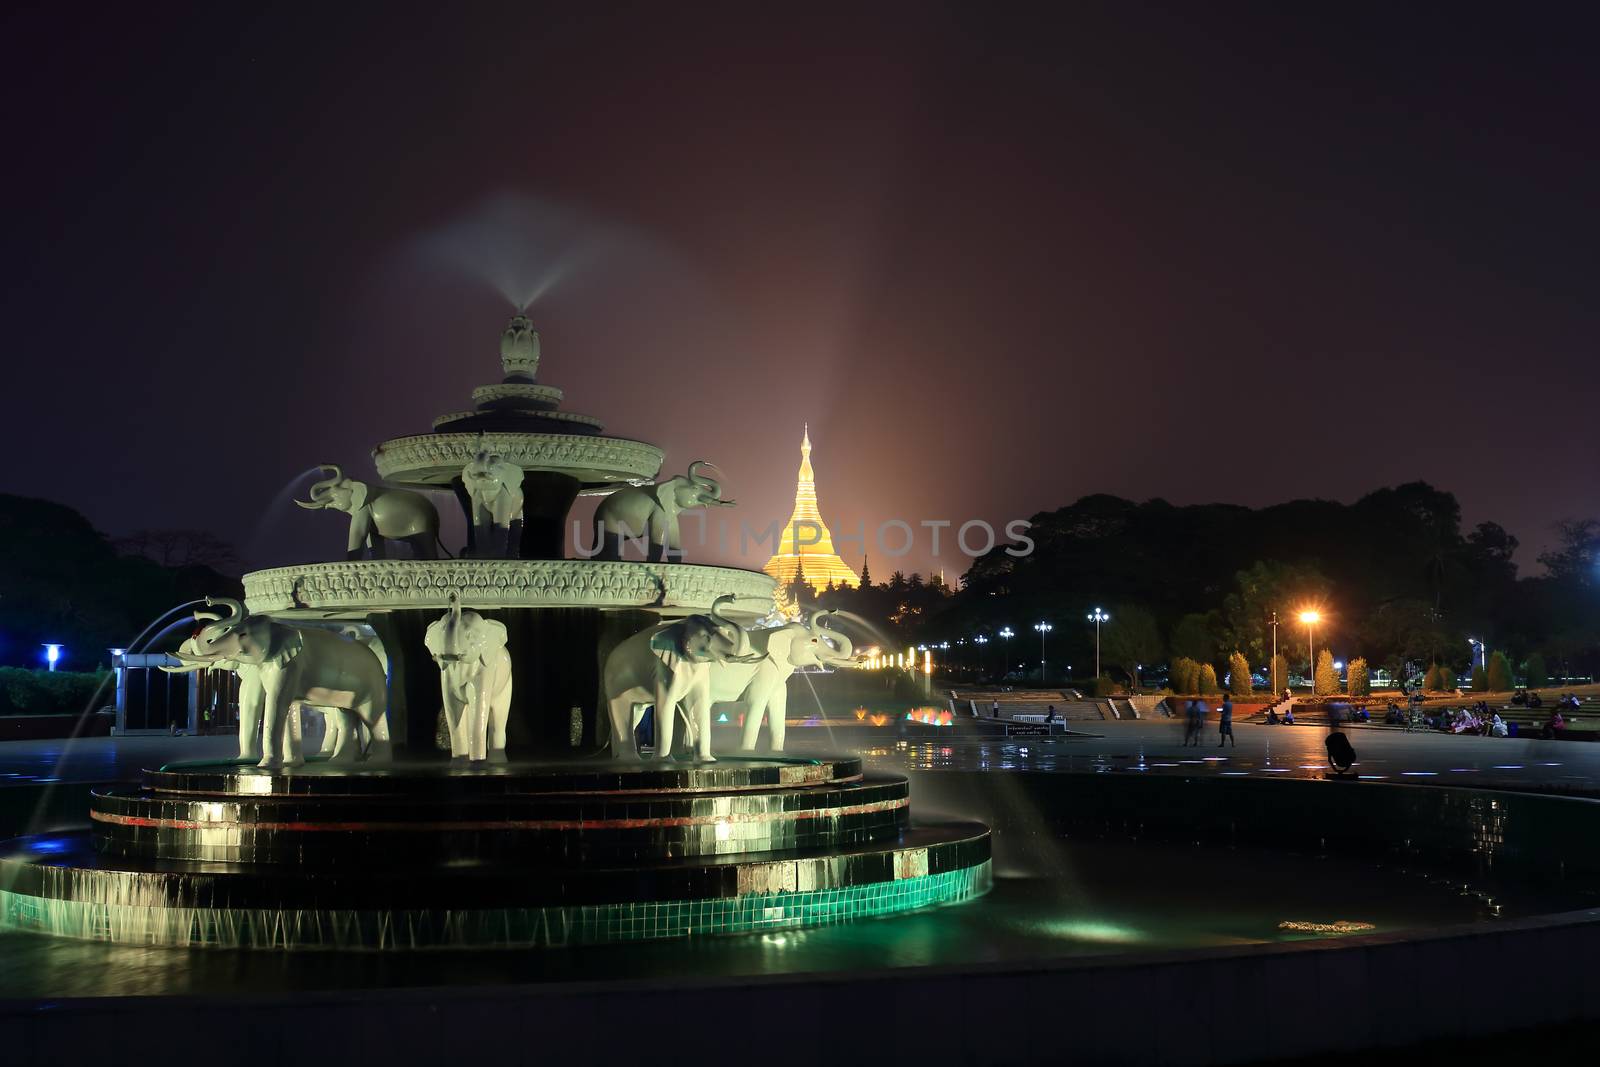 fountain with colorful illuminations at night near the Shwedagon Pagoda